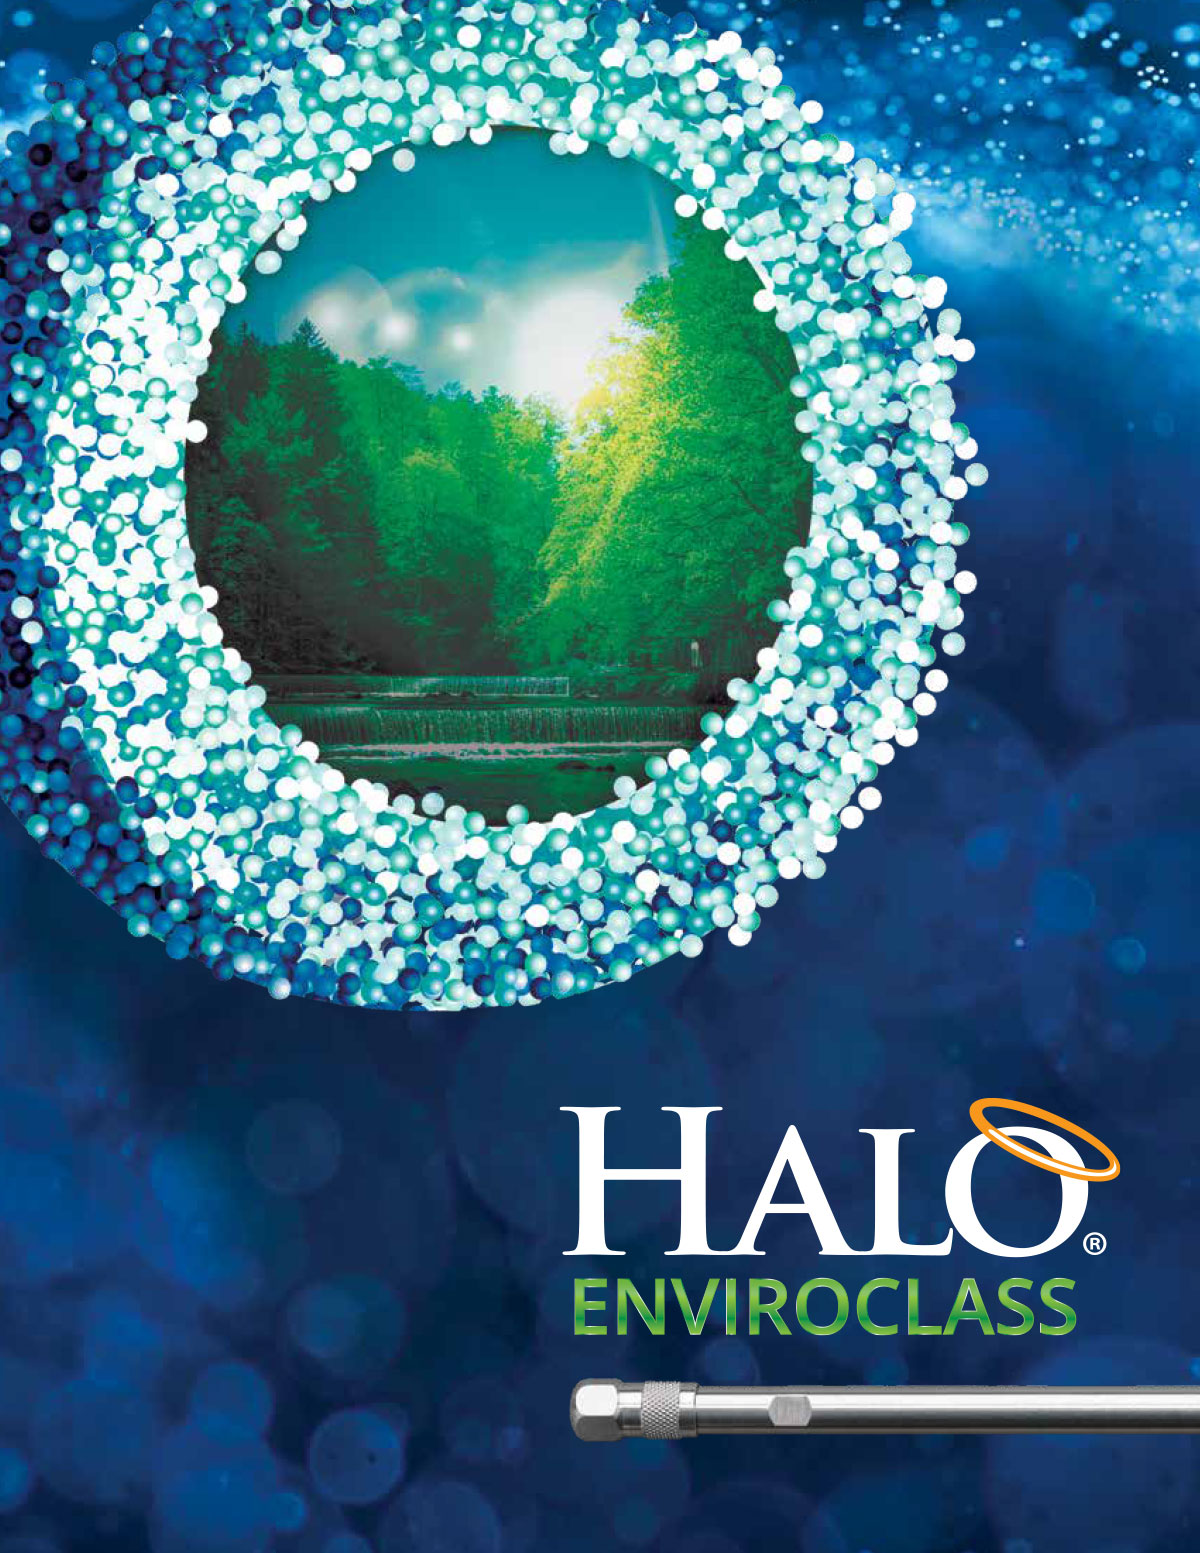 halo enviroclass - hplc environmental applications